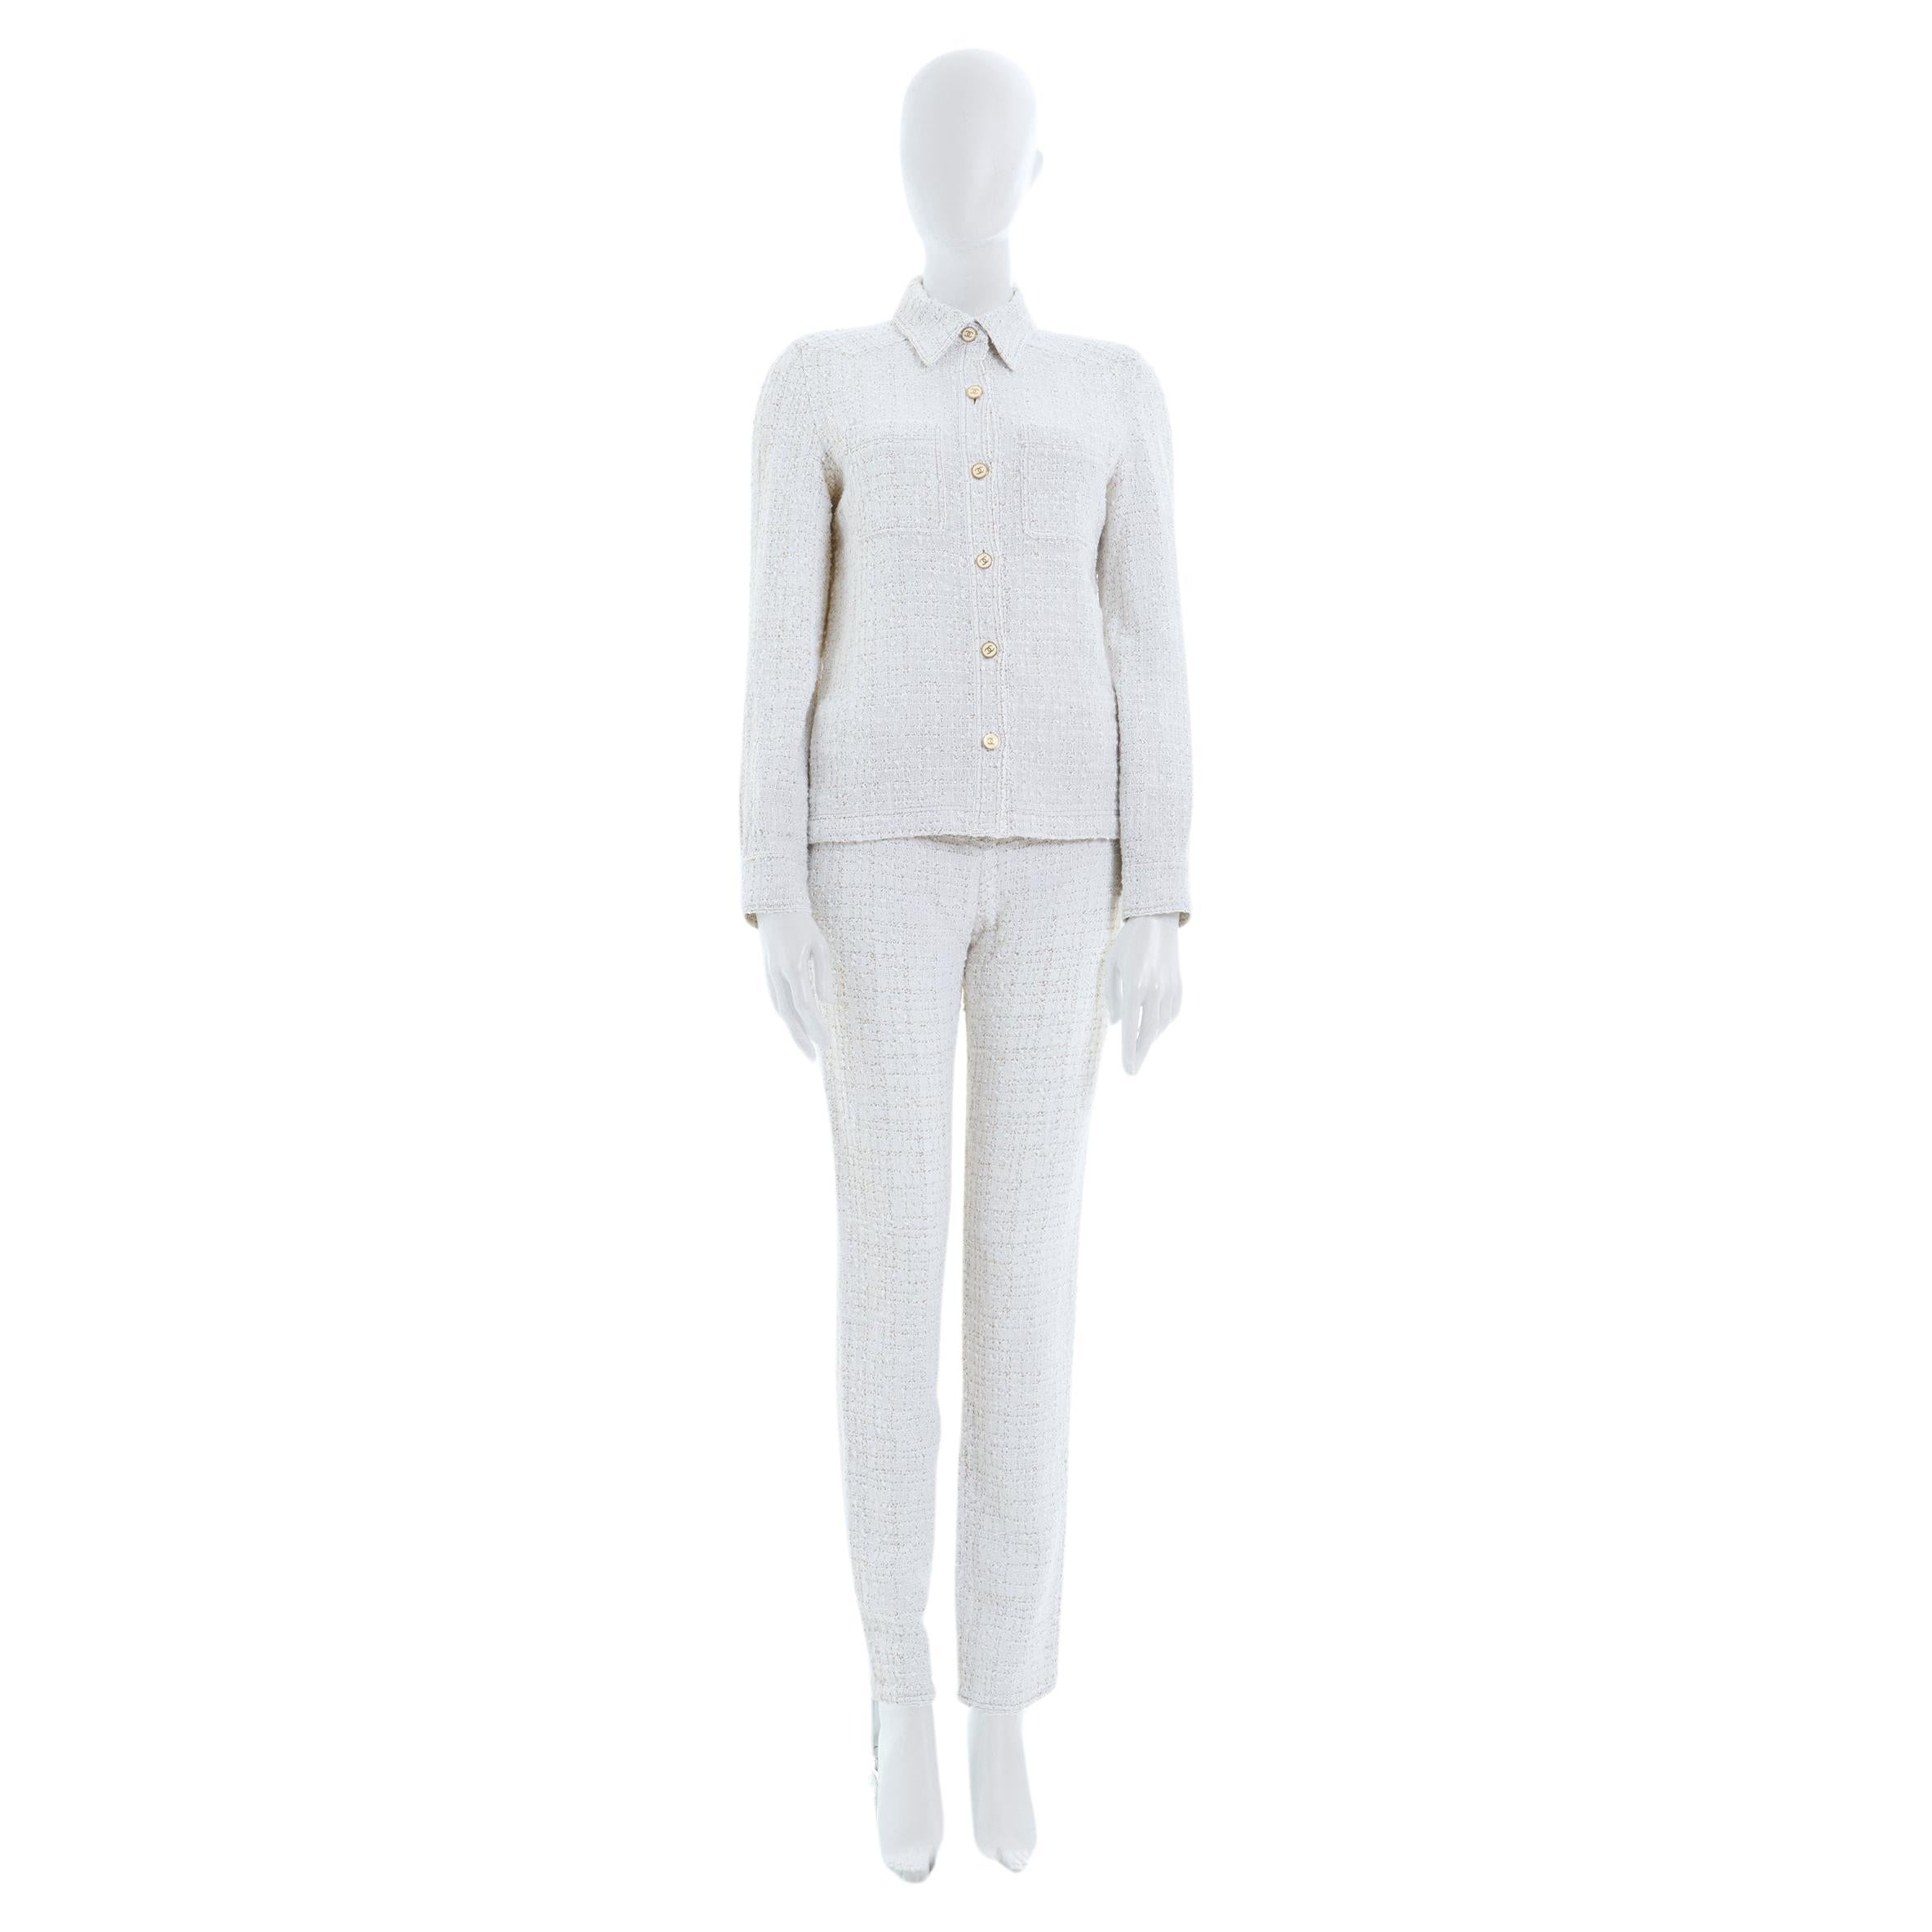 Chanel by Karl Lagerfeld S/S 2001 Off-White Bouclé-Hemd Jacke und Hose Set  im Angebot